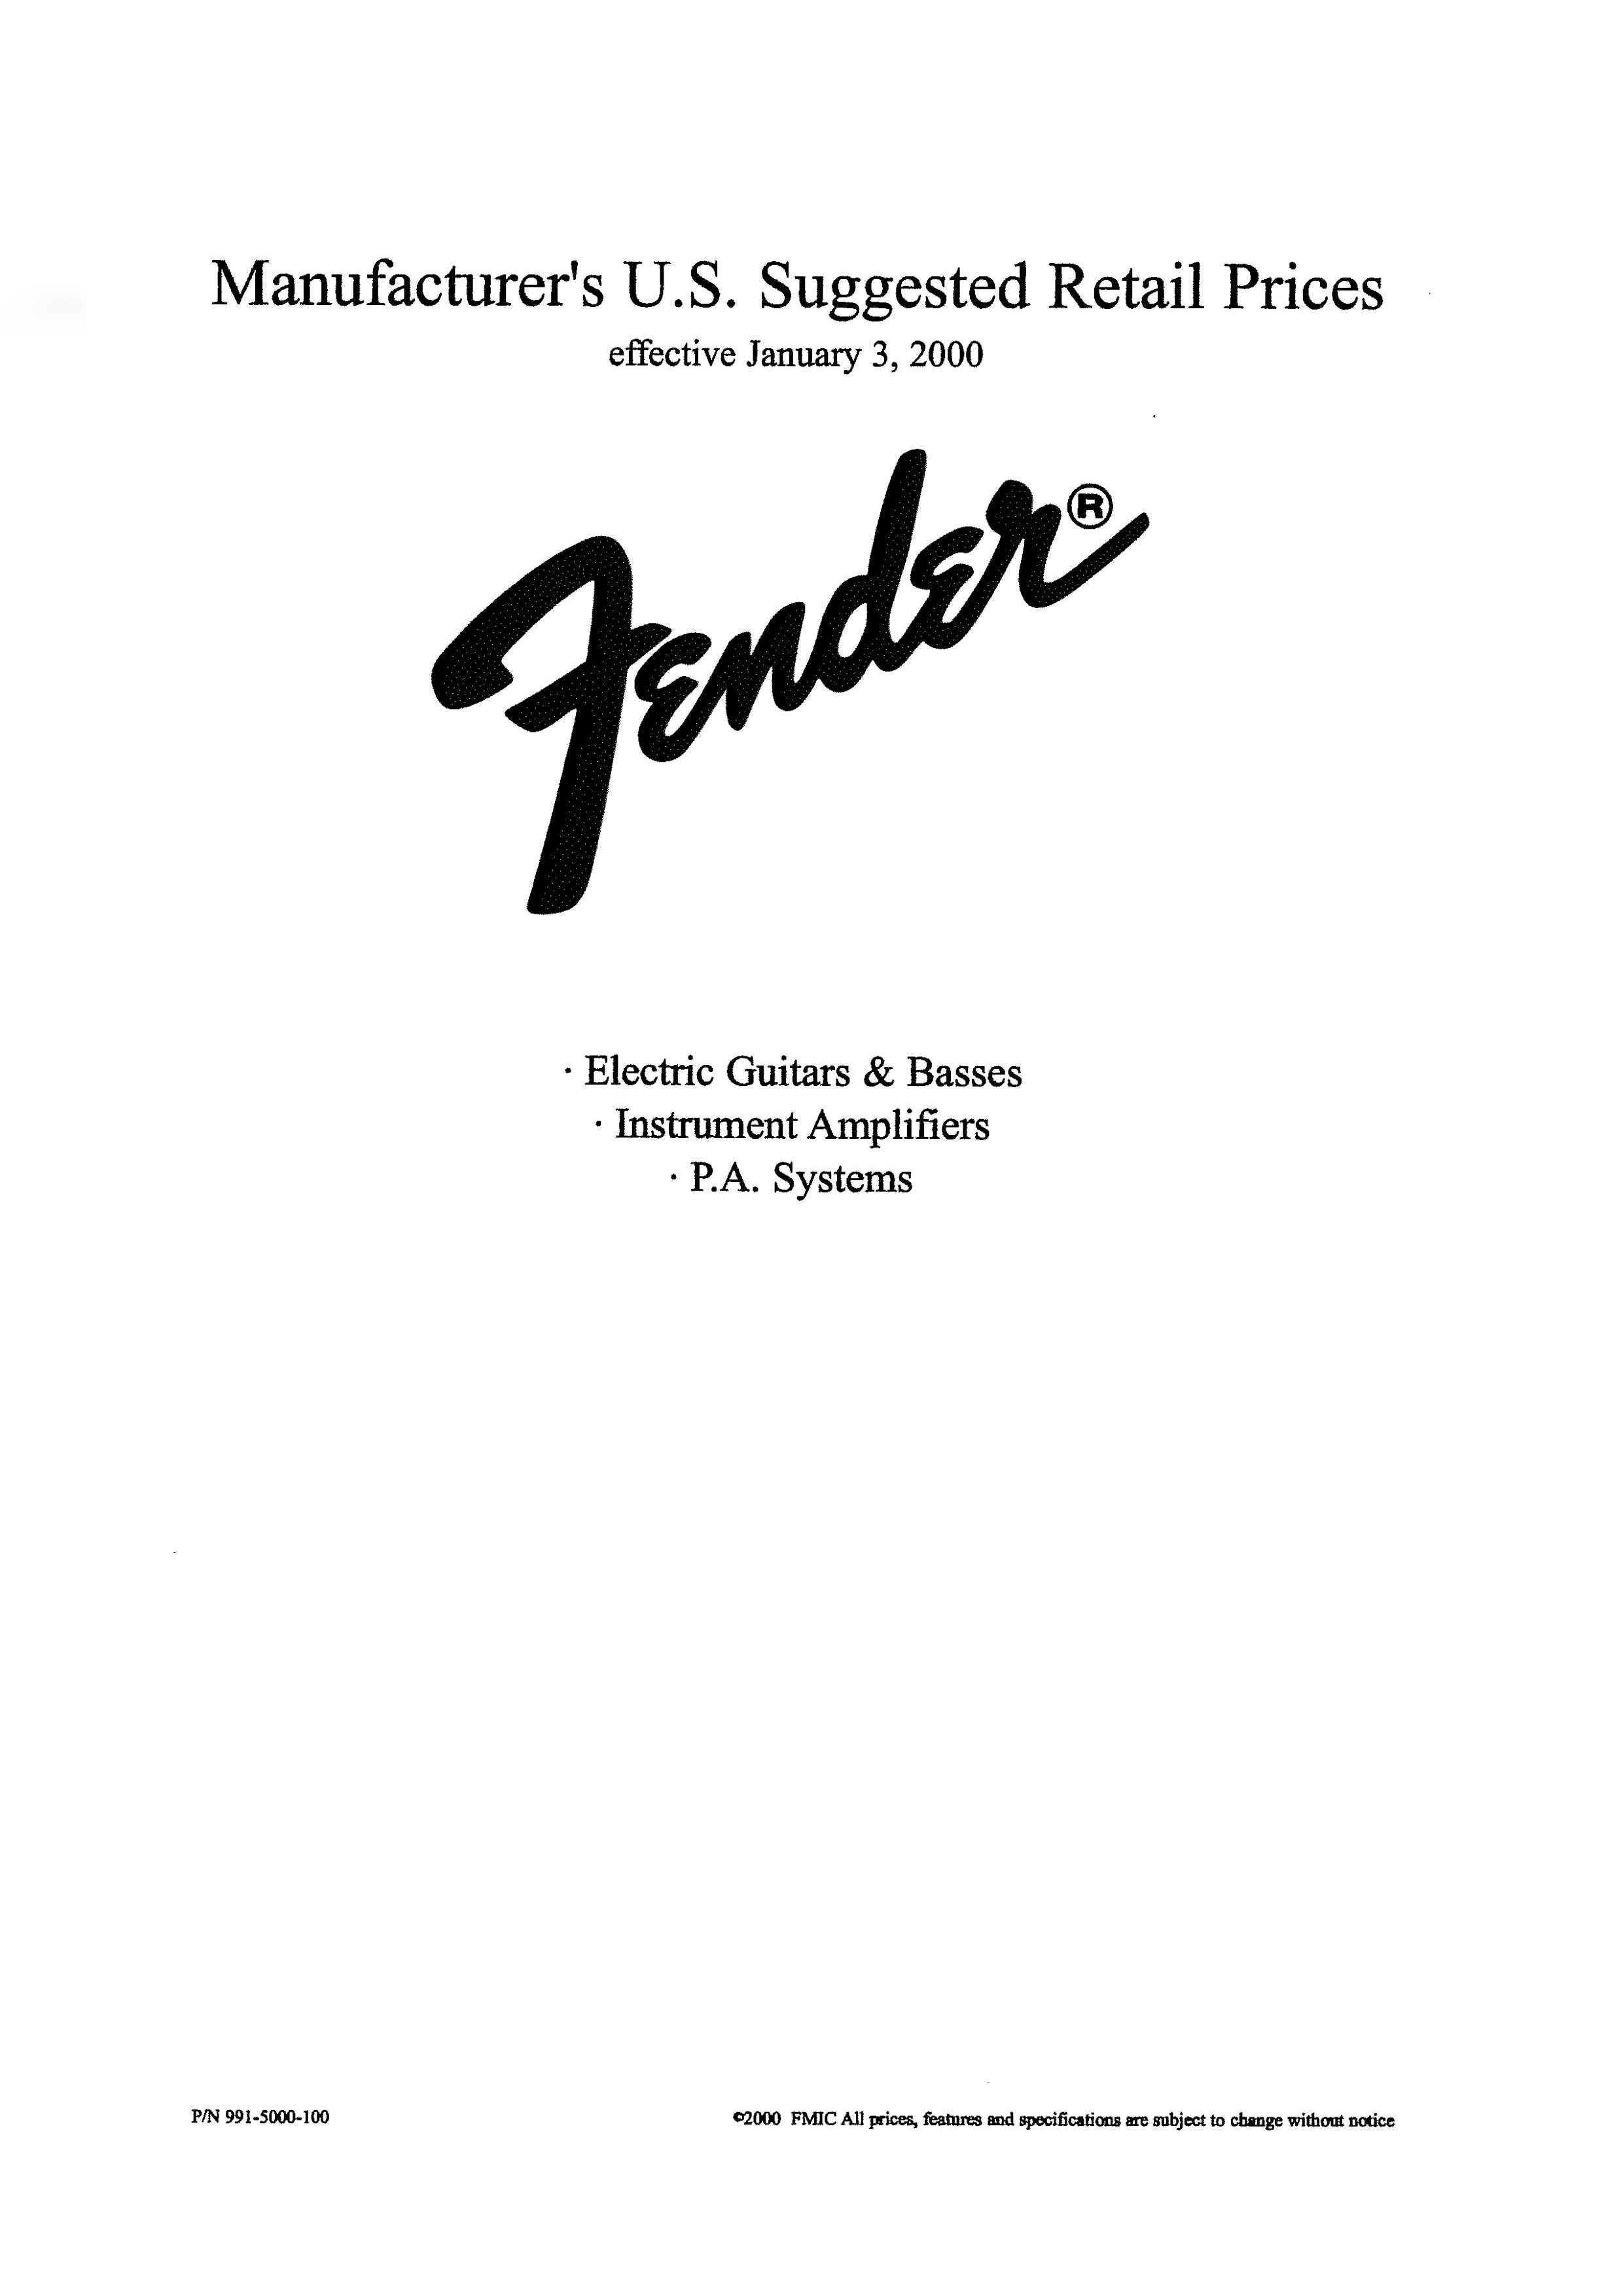 Fender Price list 2000